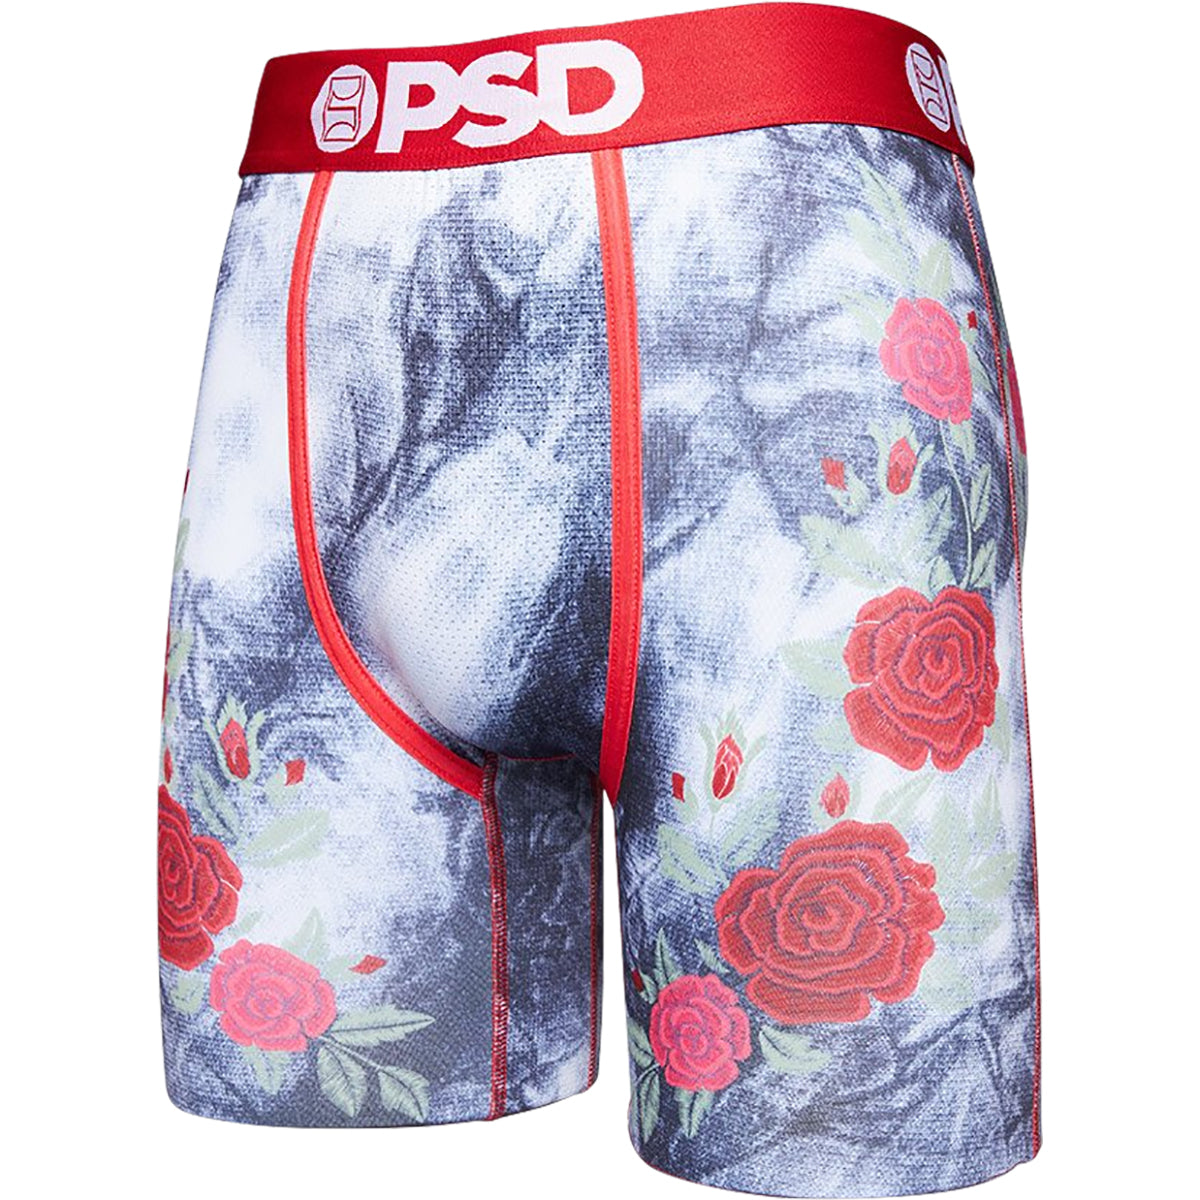 PSD Tie Dye Roses Boxer Men's Bottom Underwear-121180027